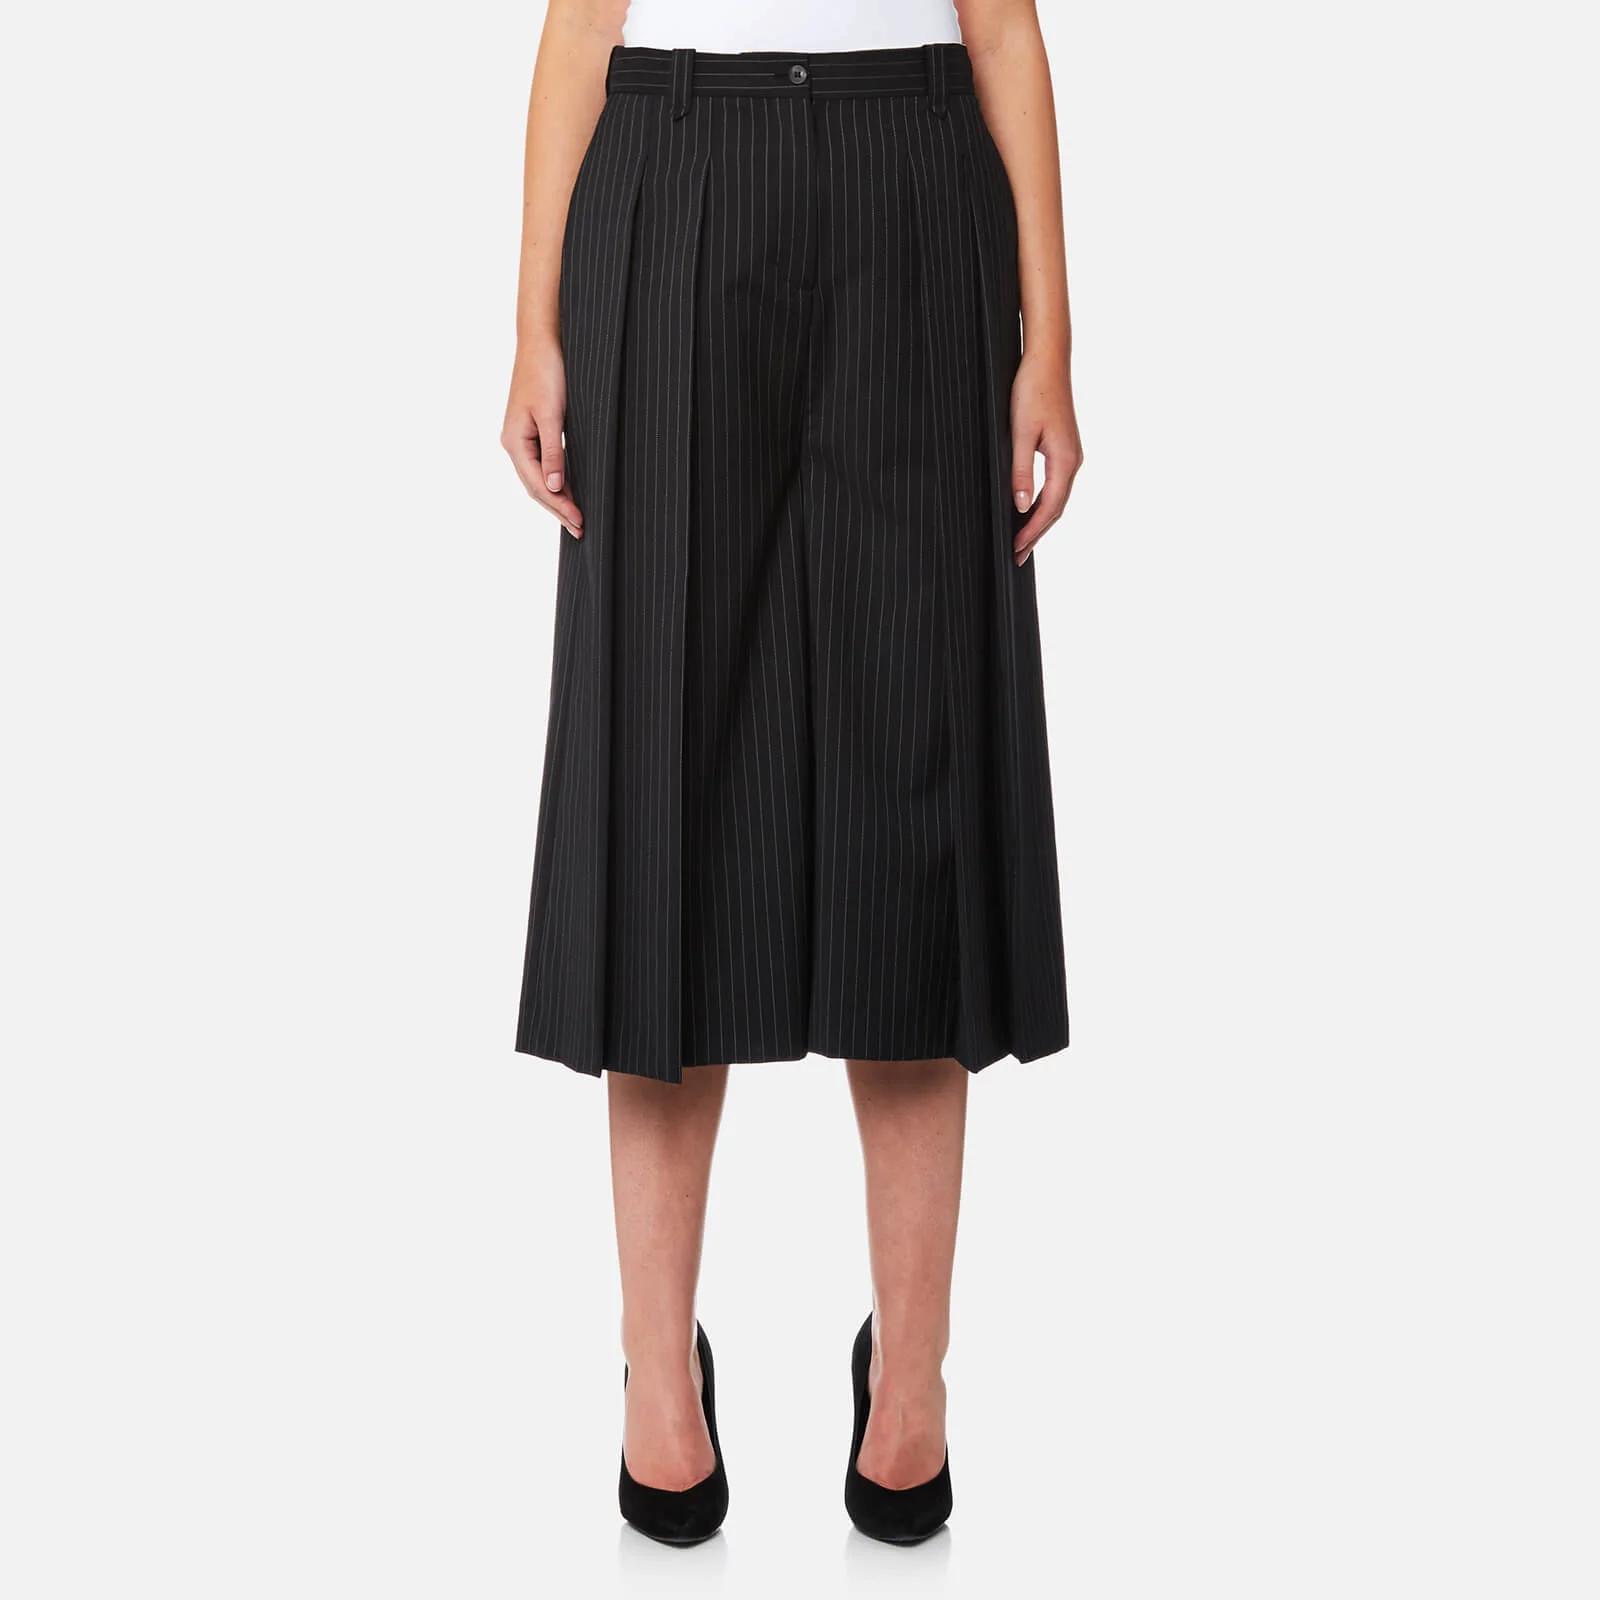 McQ Alexander McQueen Women's Pleated Pinstripe Culottes - Black Image 1